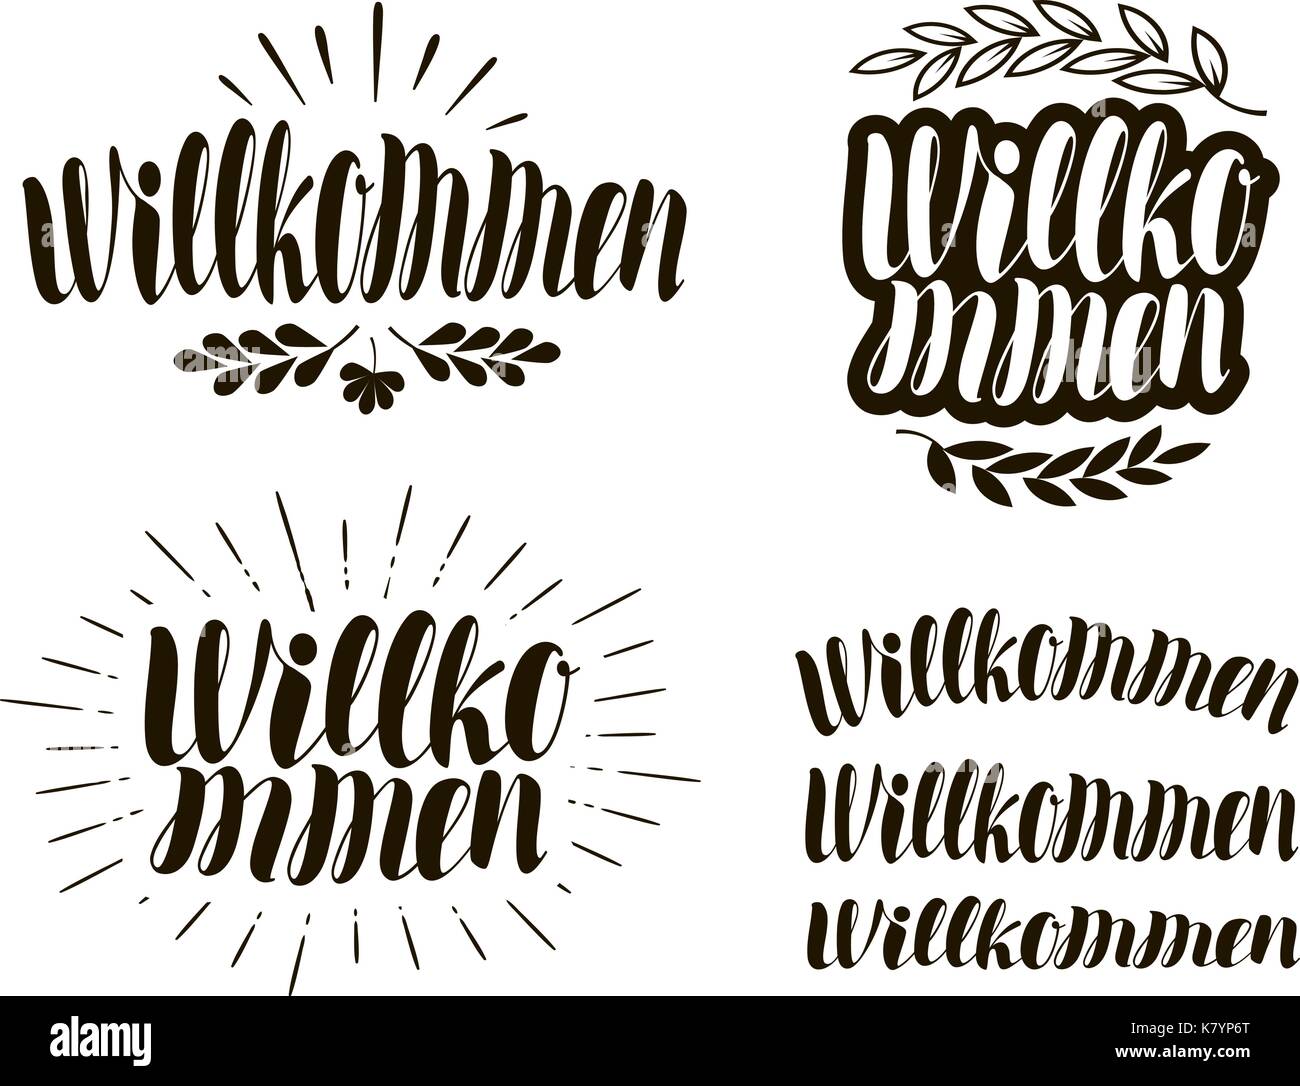 Willkommen, lettere manoscritte. calligraphy illustrazione vettoriale Illustrazione Vettoriale